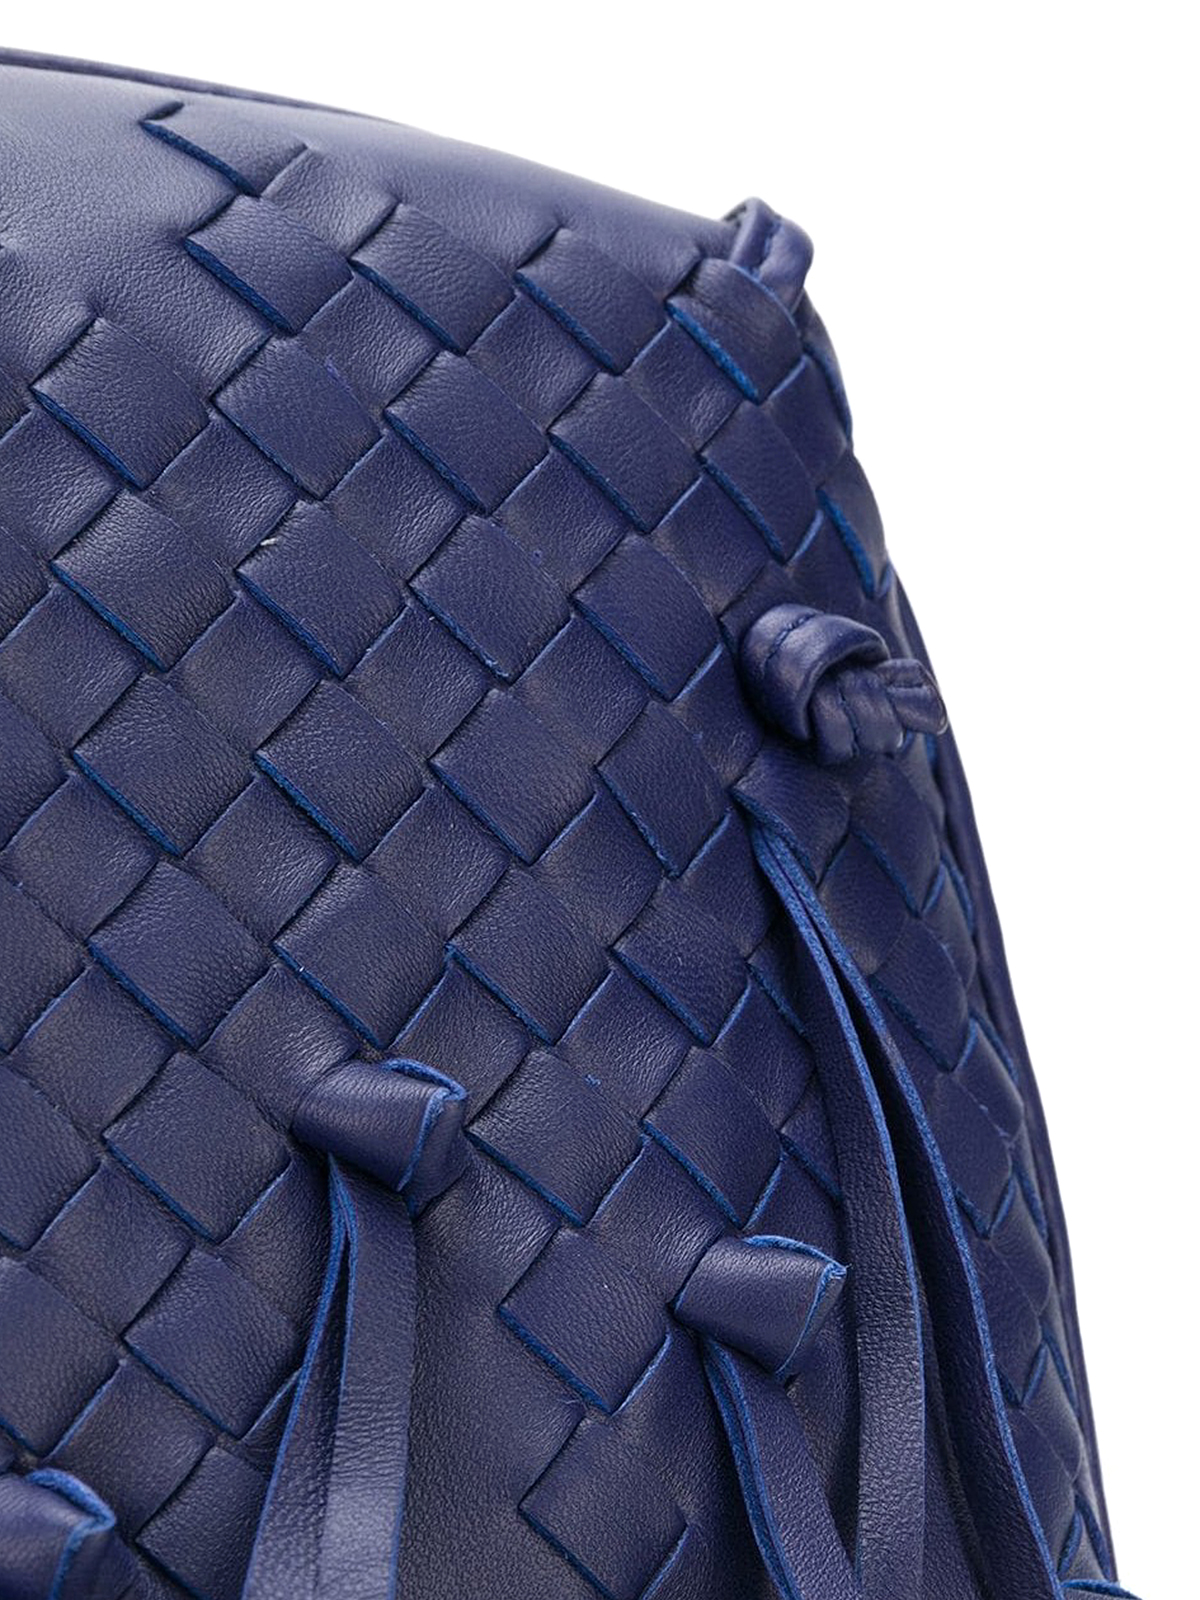 Shop Bottega Veneta Medium Nodini Intrecciato Leather Shoulder Bag